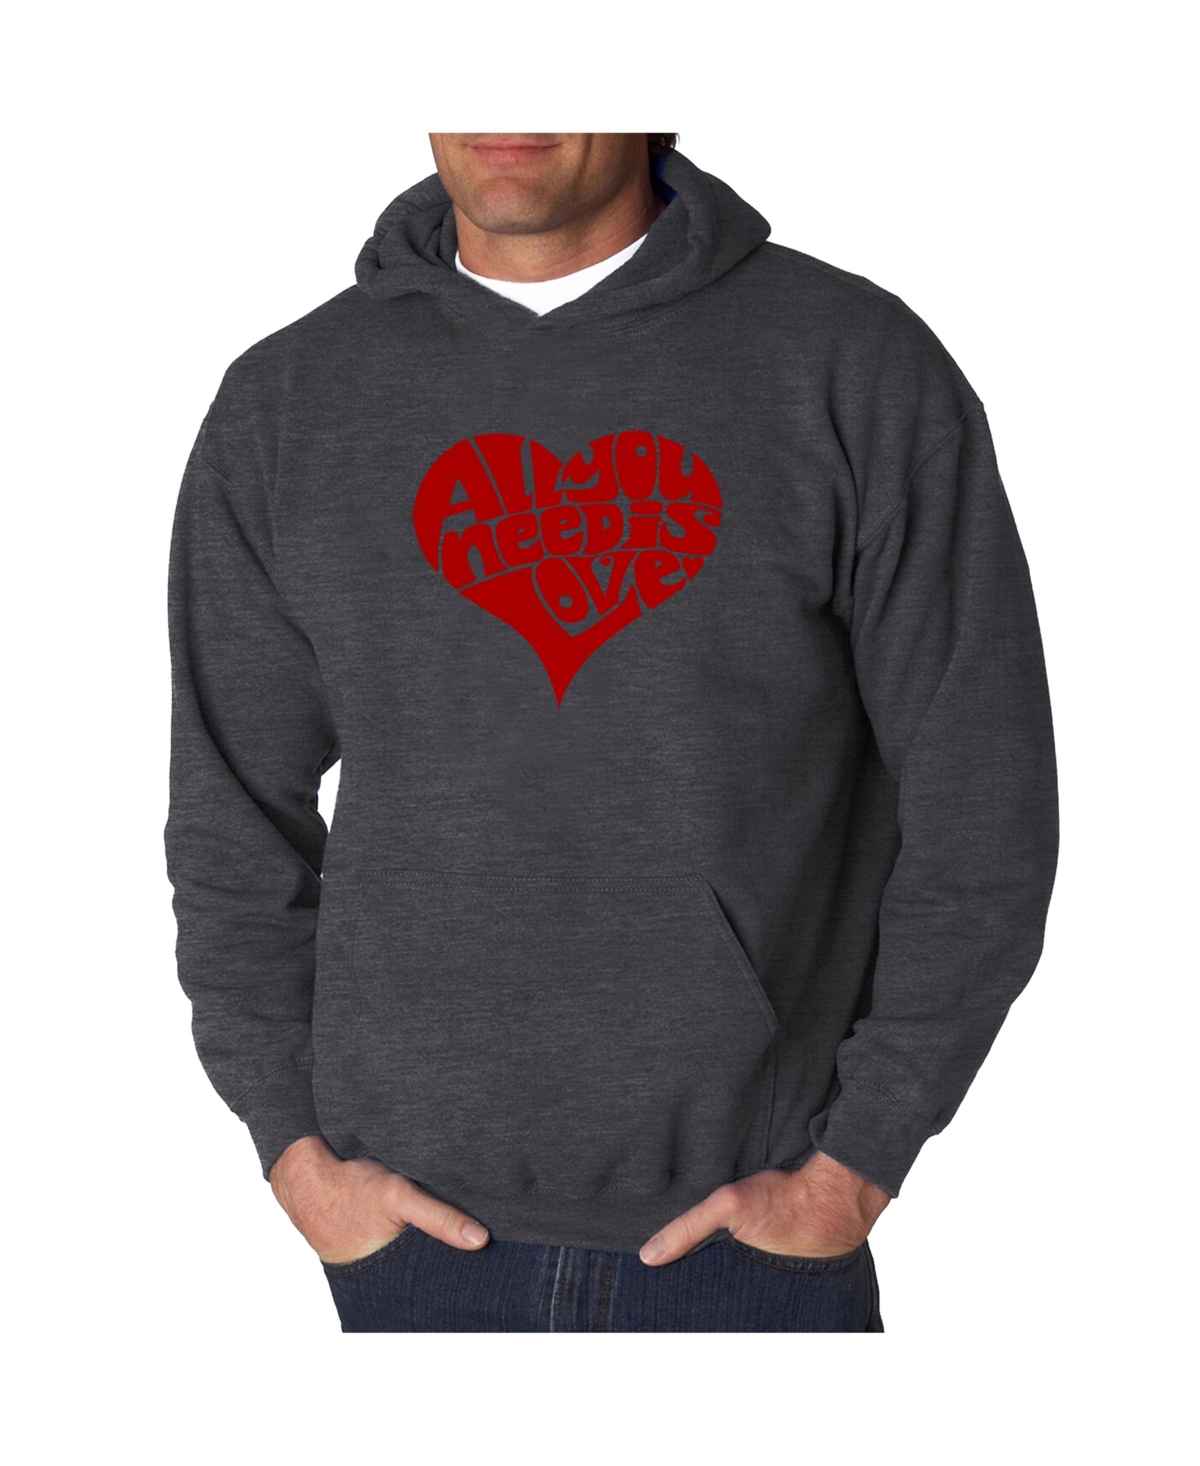 Men's Word Art Hooded Sweatshirt - All You Need Is Love - Gray